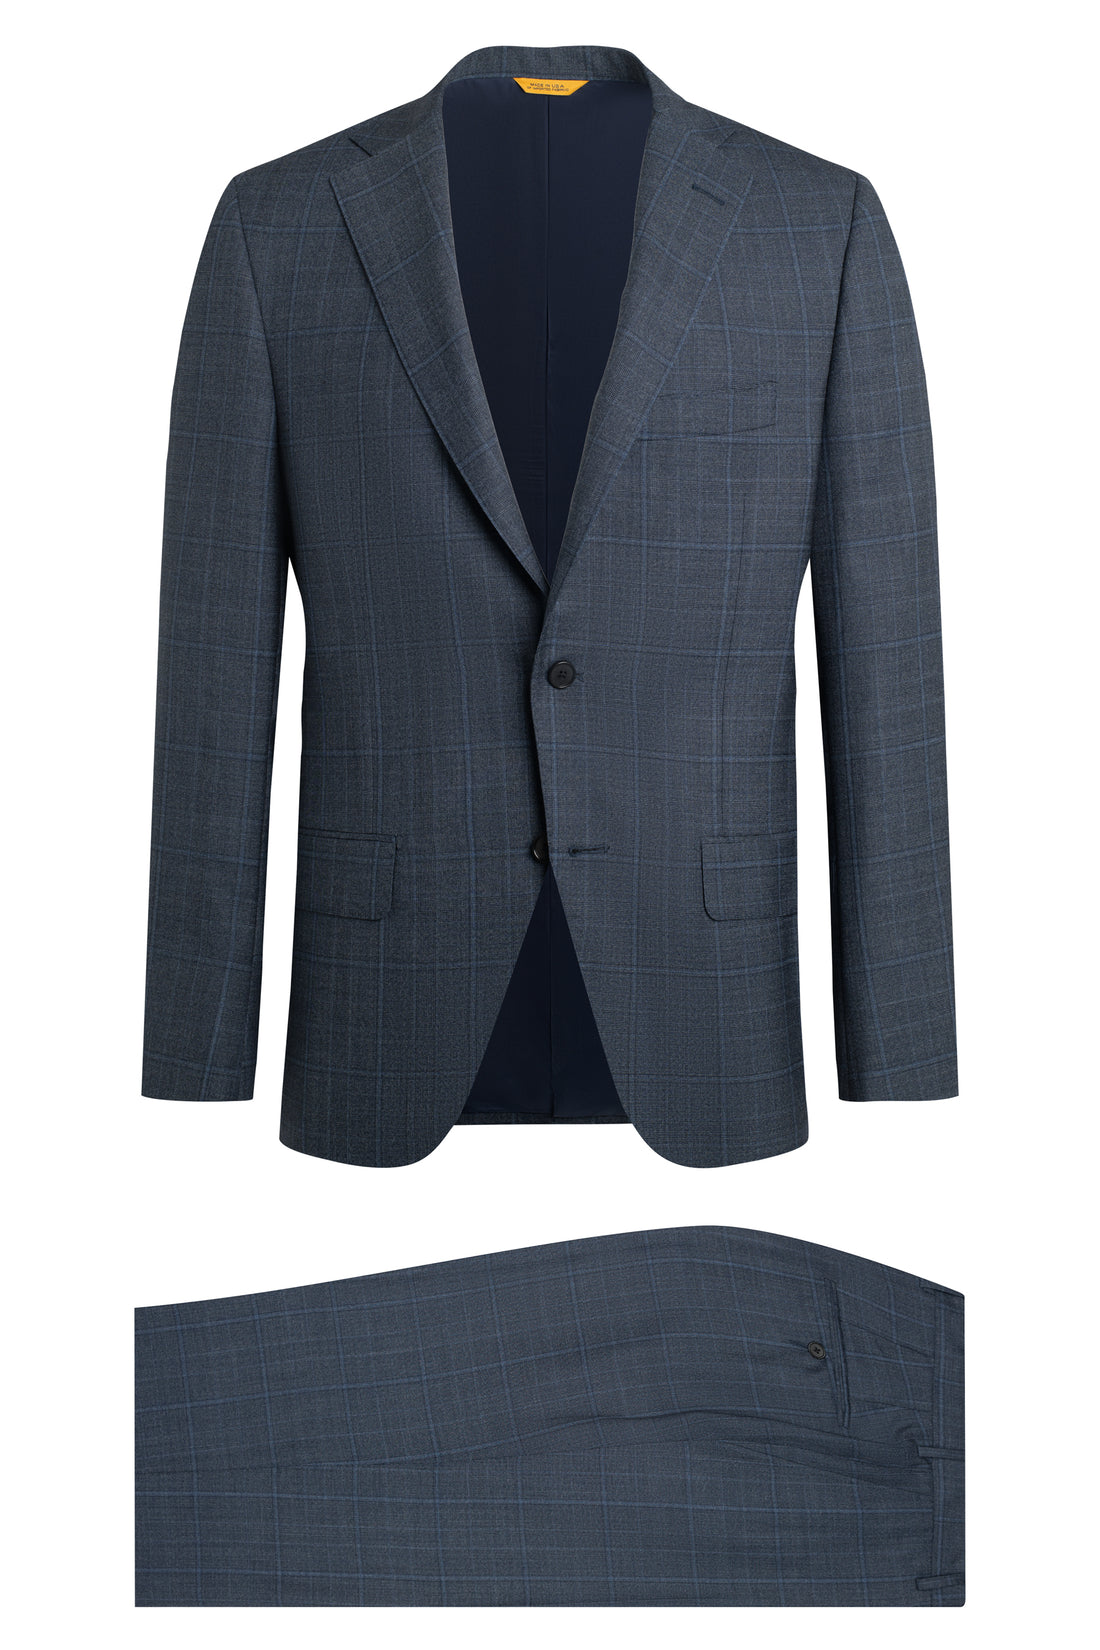 Slate Blue Tonal Plaid Suit